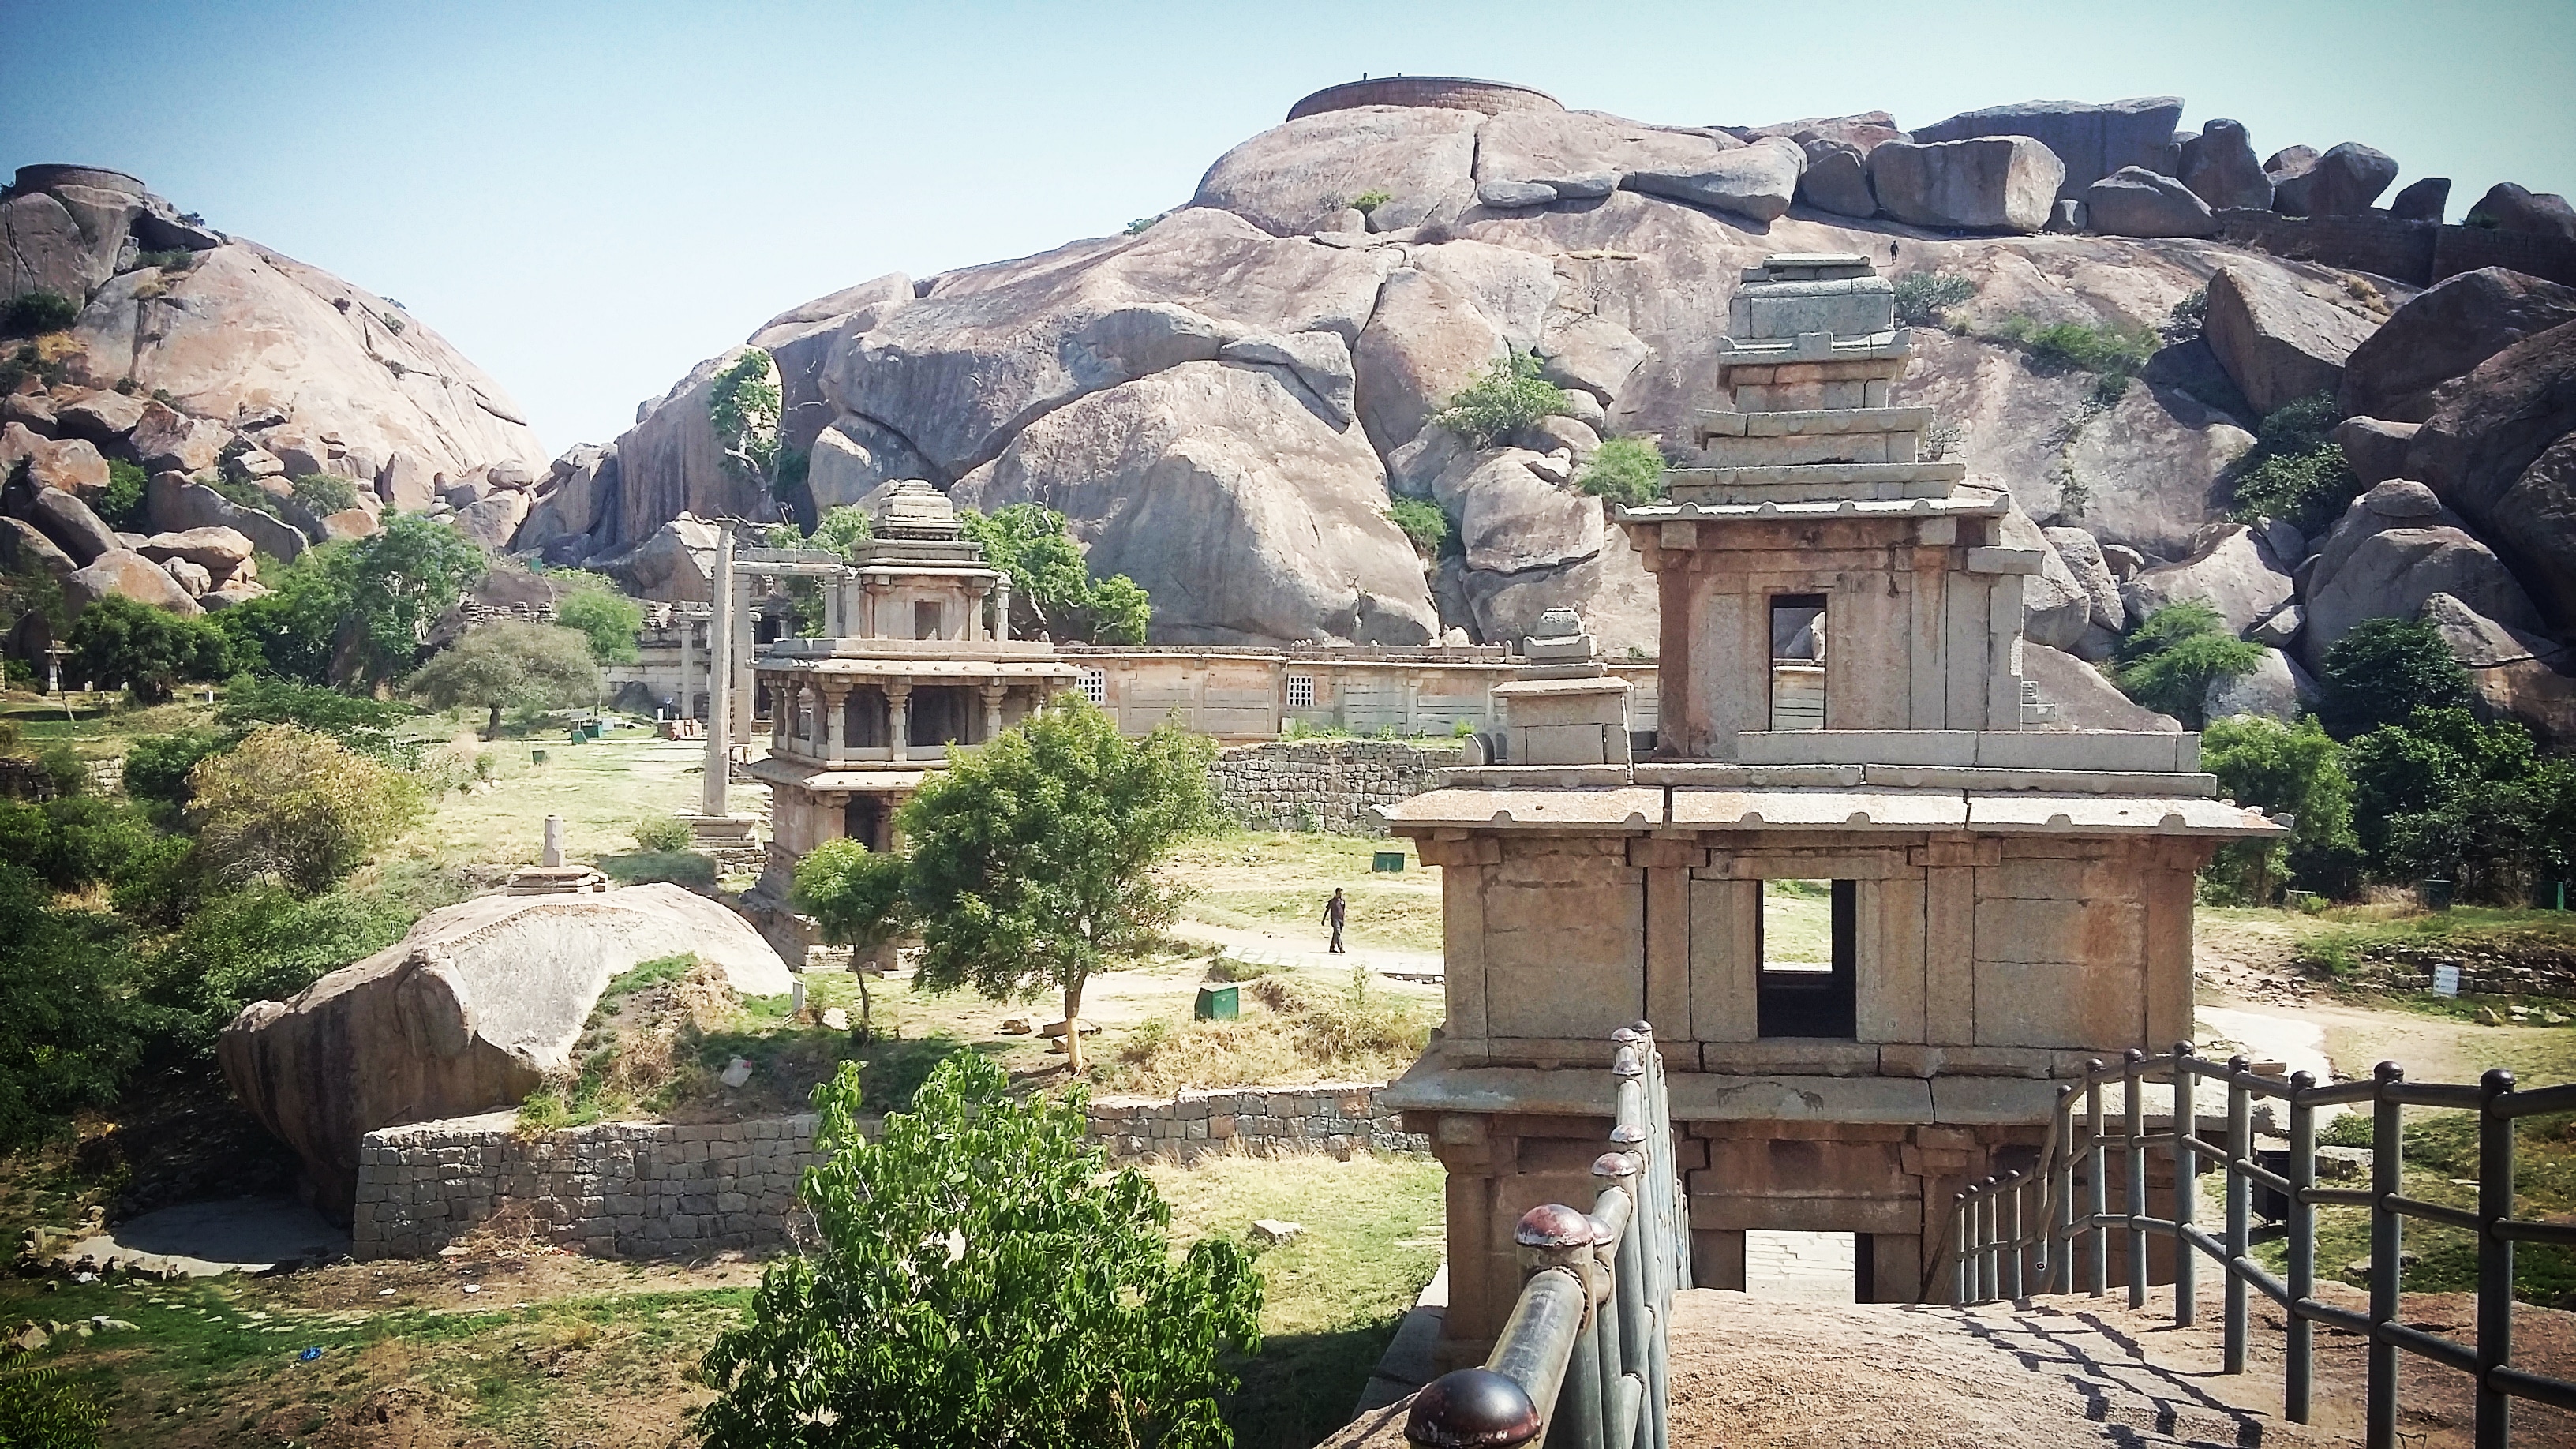 https://upload.wikimedia.org/wikipedia/commons/0/0e/The_magnificent_fort_of_Chitradurga.jpg